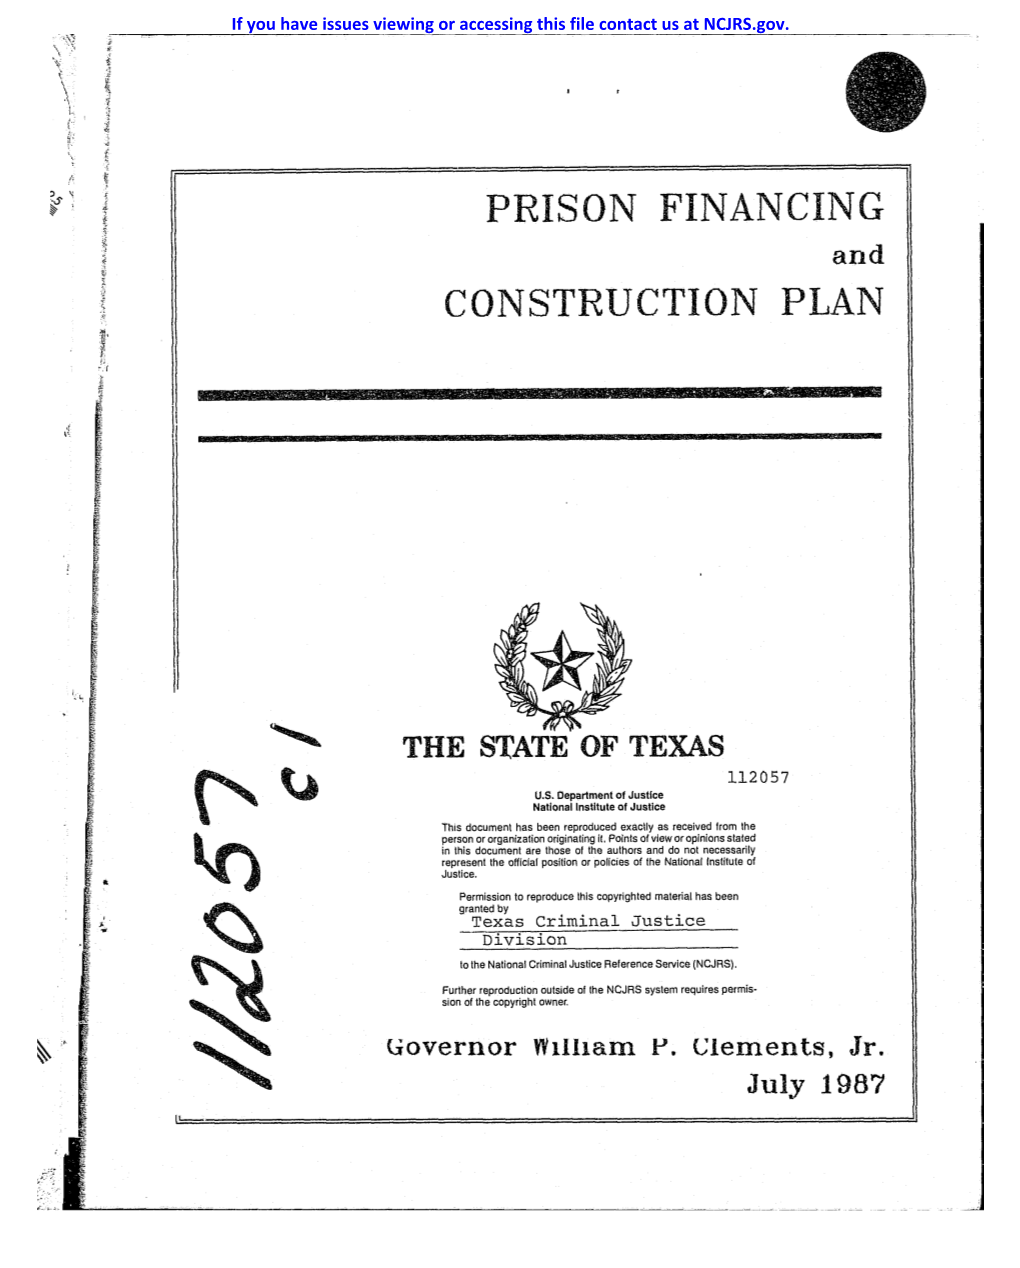 Prison Financing Construction Plan